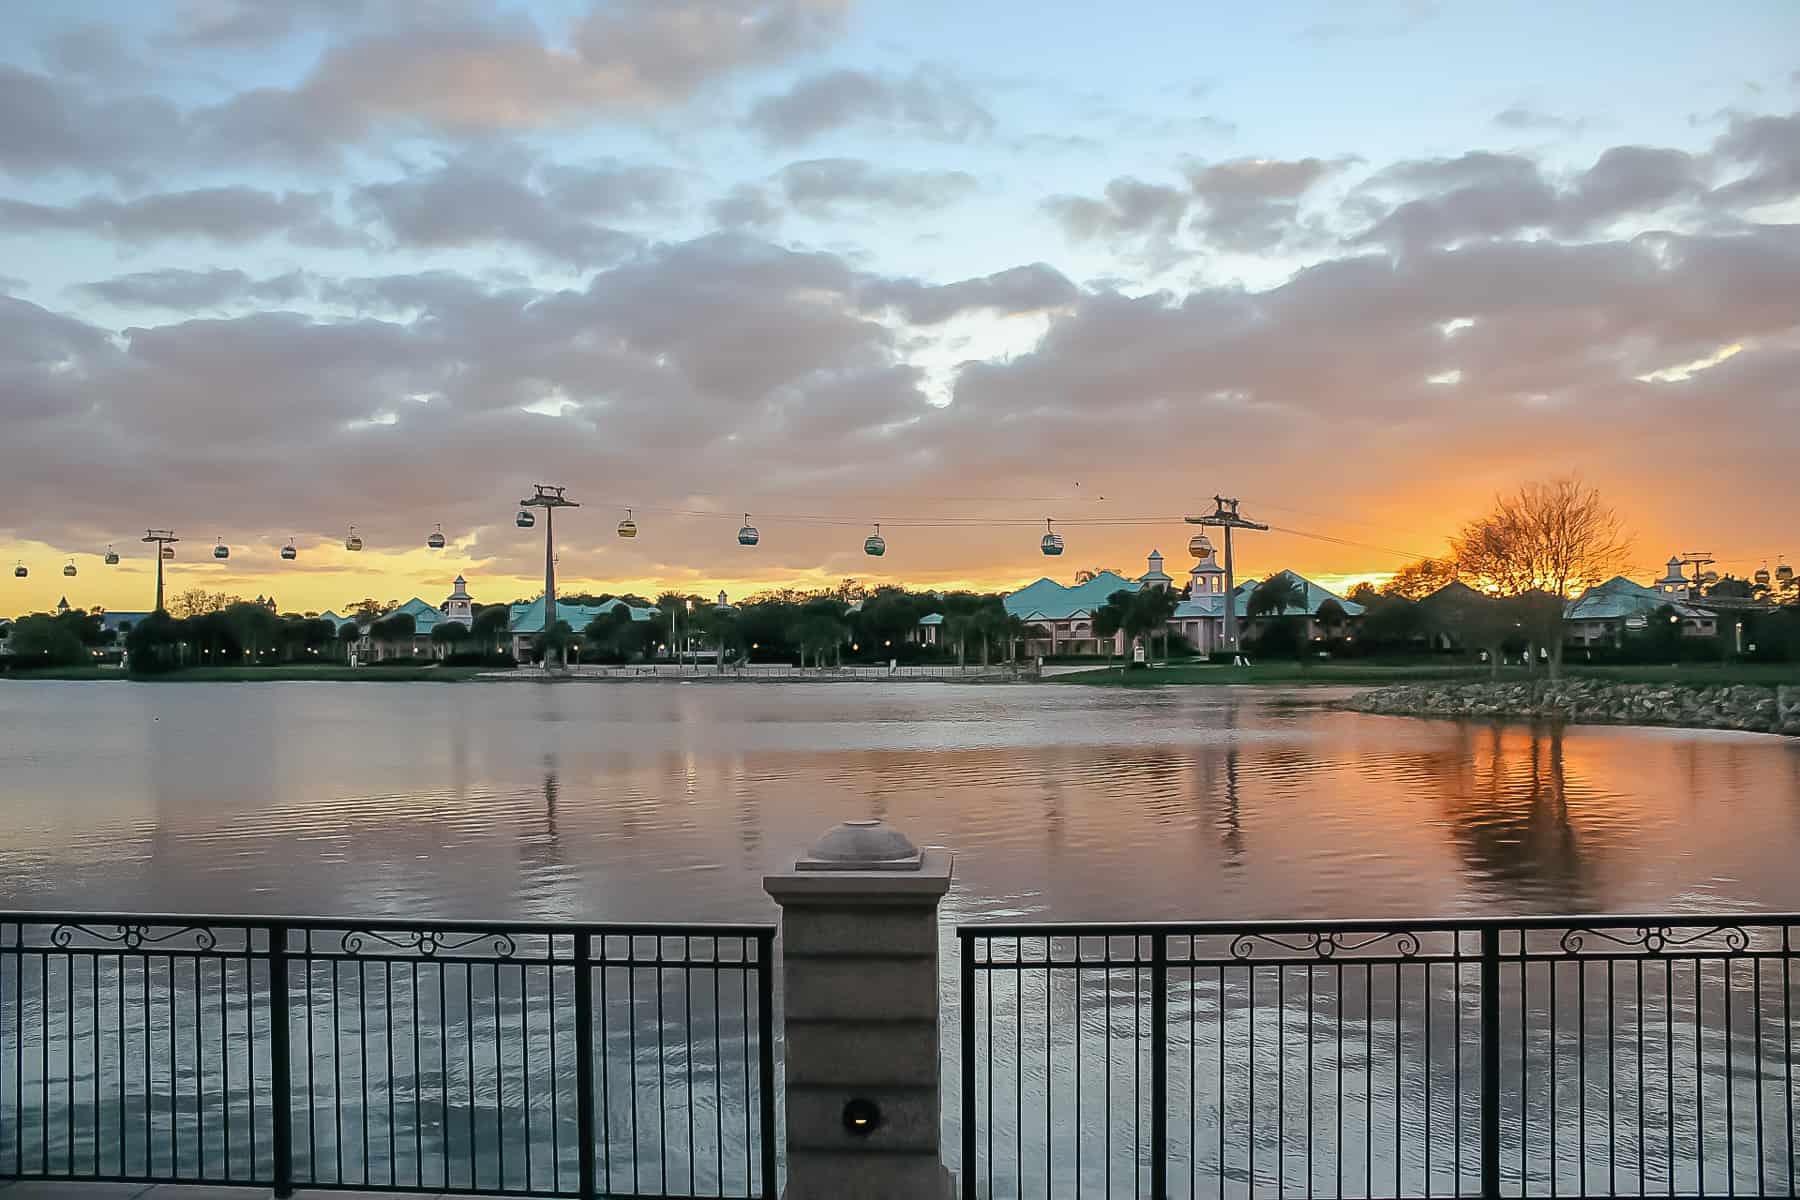 Skyliner at Disney's Caribbean Beach at sunset